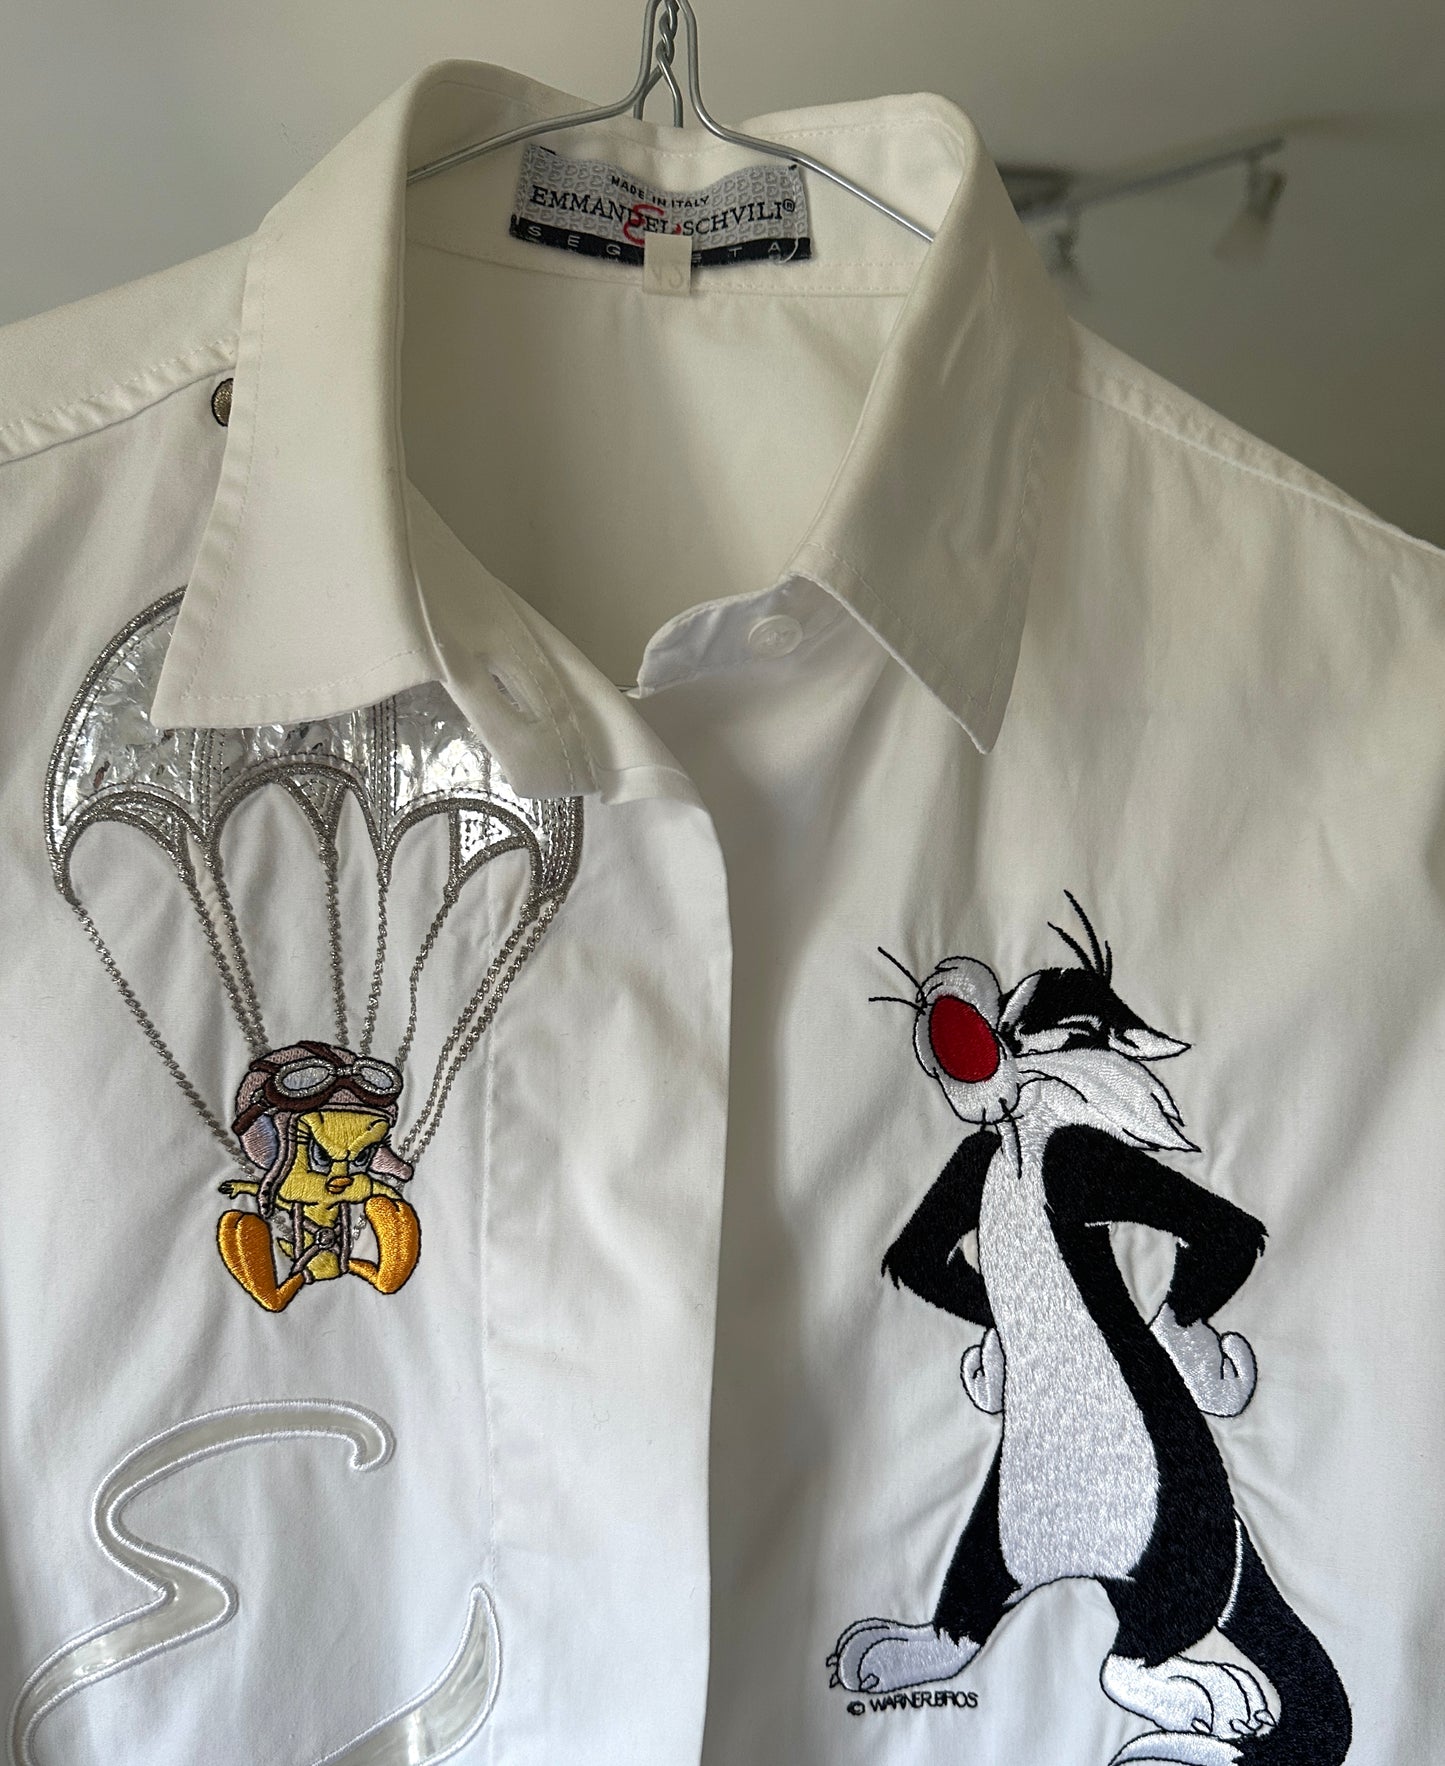 Emmanuel Schvili X Looney Tunes shirt